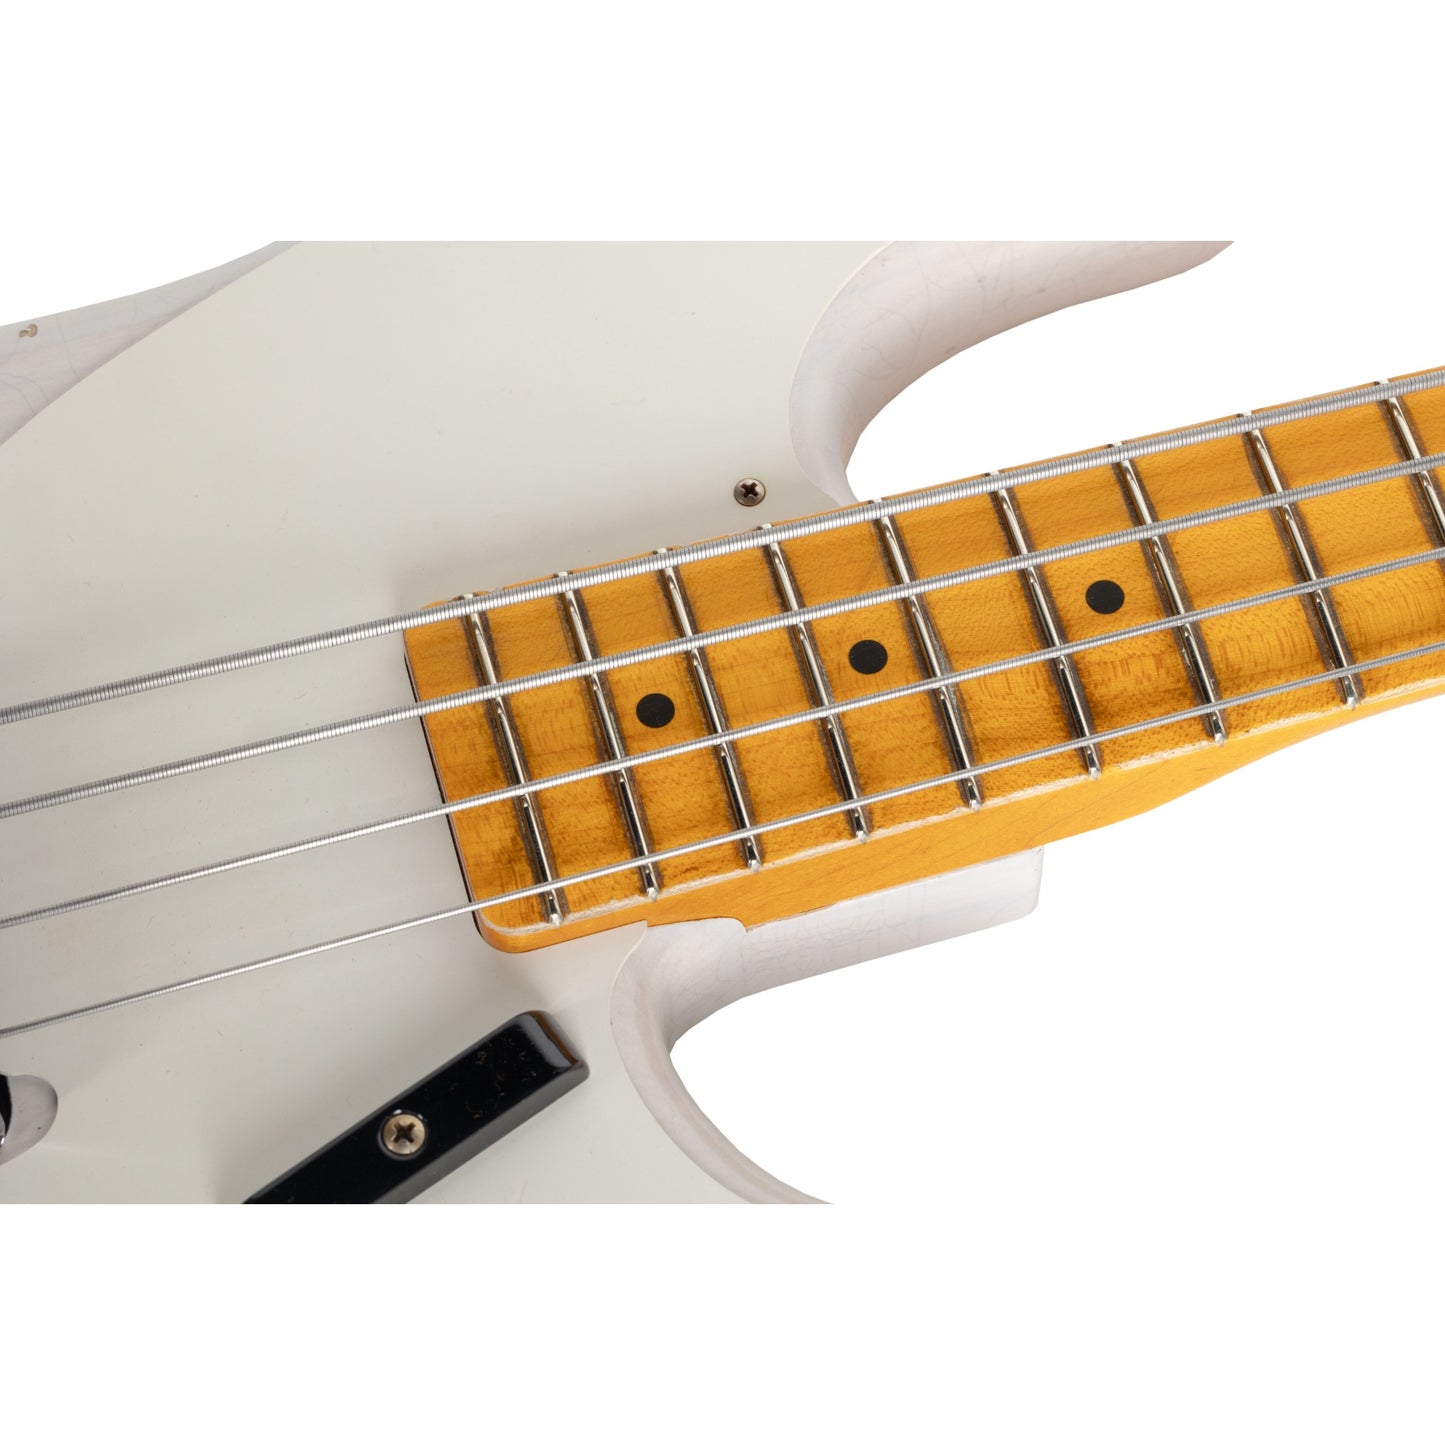 Fender Custom Shop ‘55 Relic Precision Bass Guitar - White Blonde